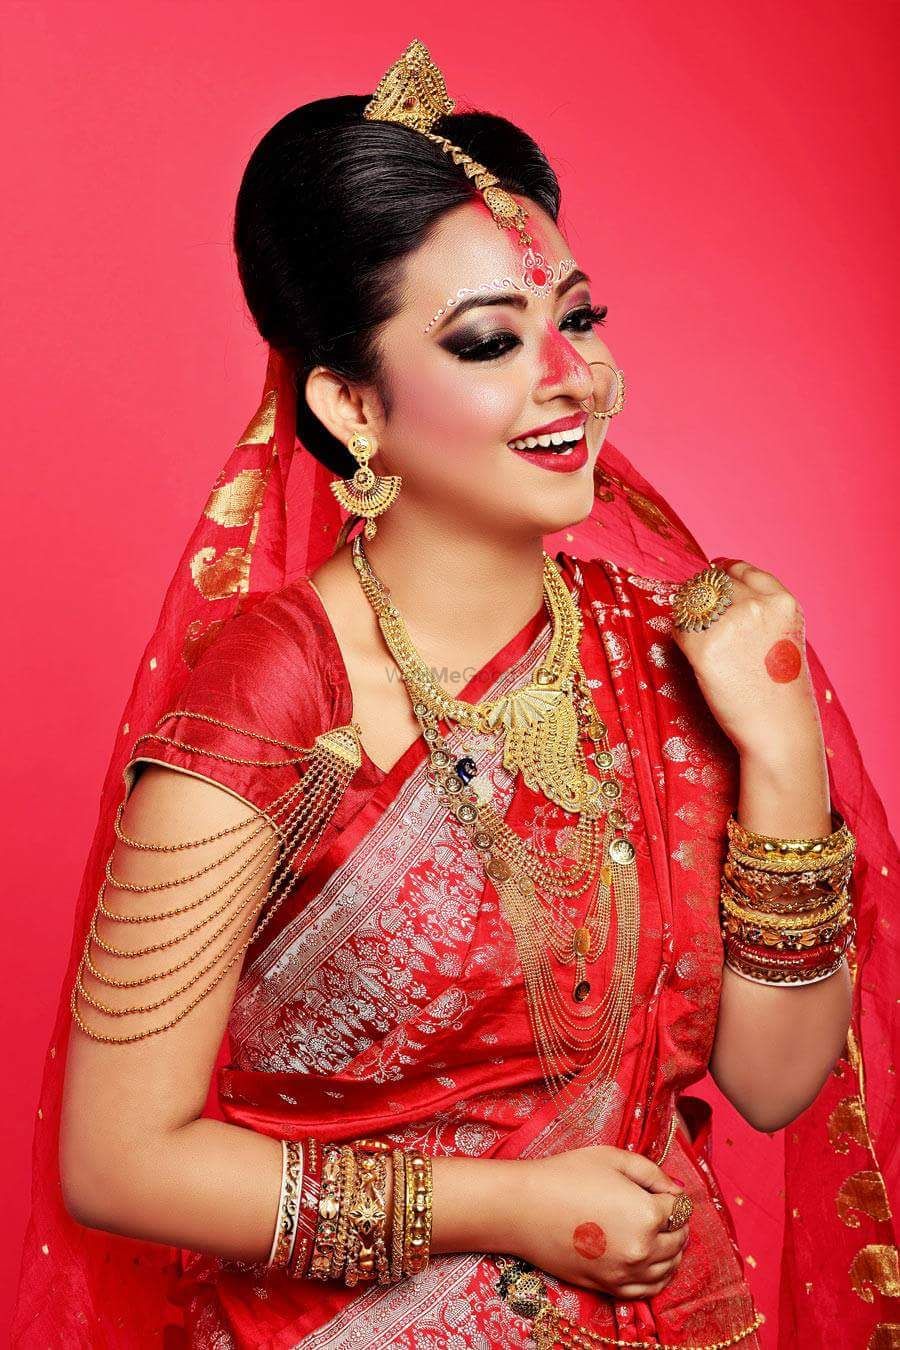 Photo By Munmun Guha Makeover  - Bridal Makeup